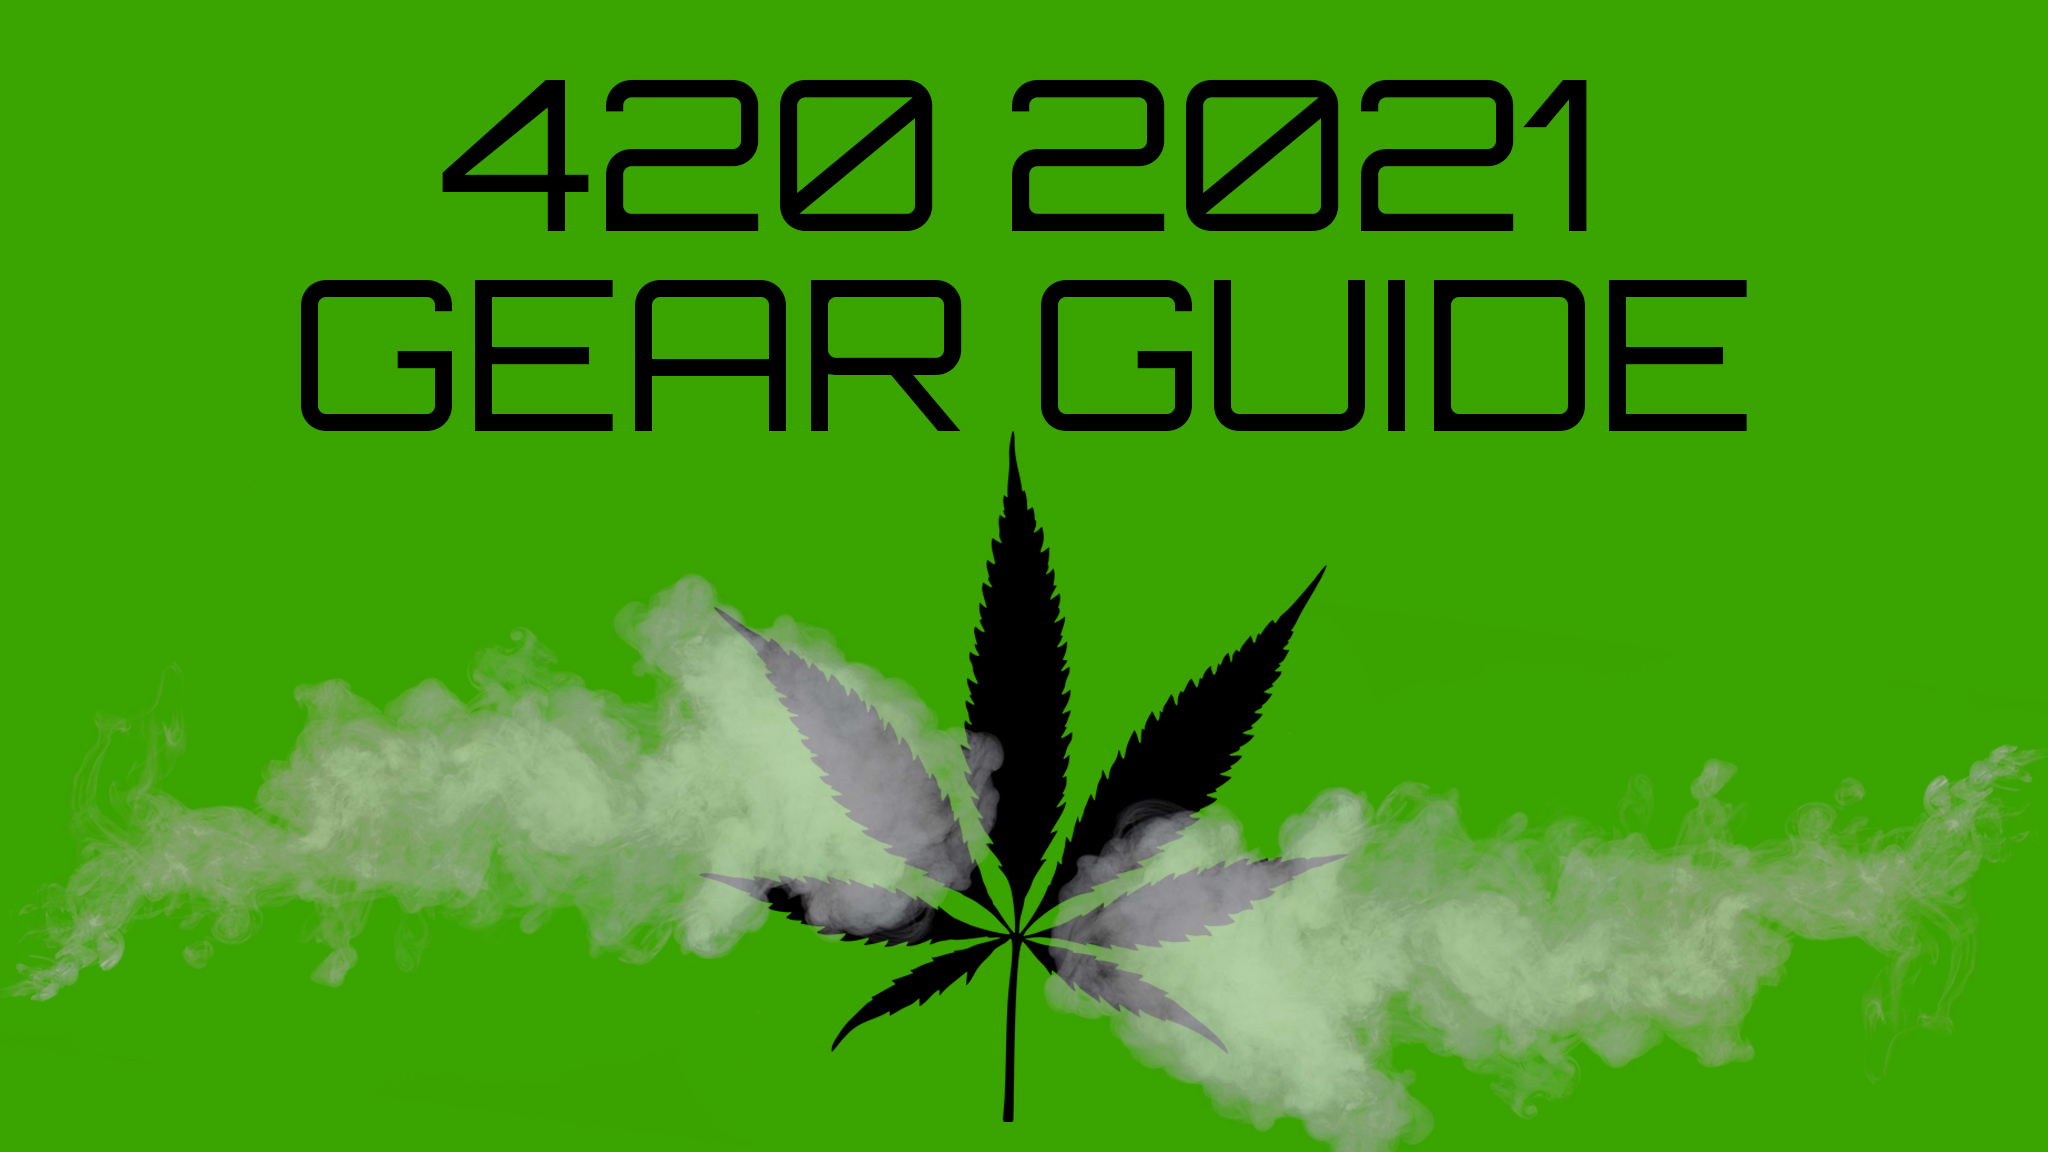 Josh’s Favorite 420 Supplies for 2021